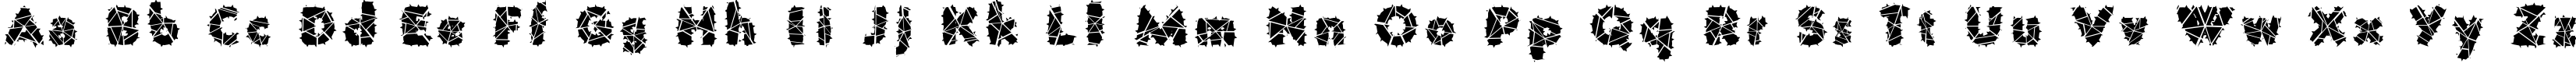 Пример написания английского алфавита шрифтом Prison Wire 1